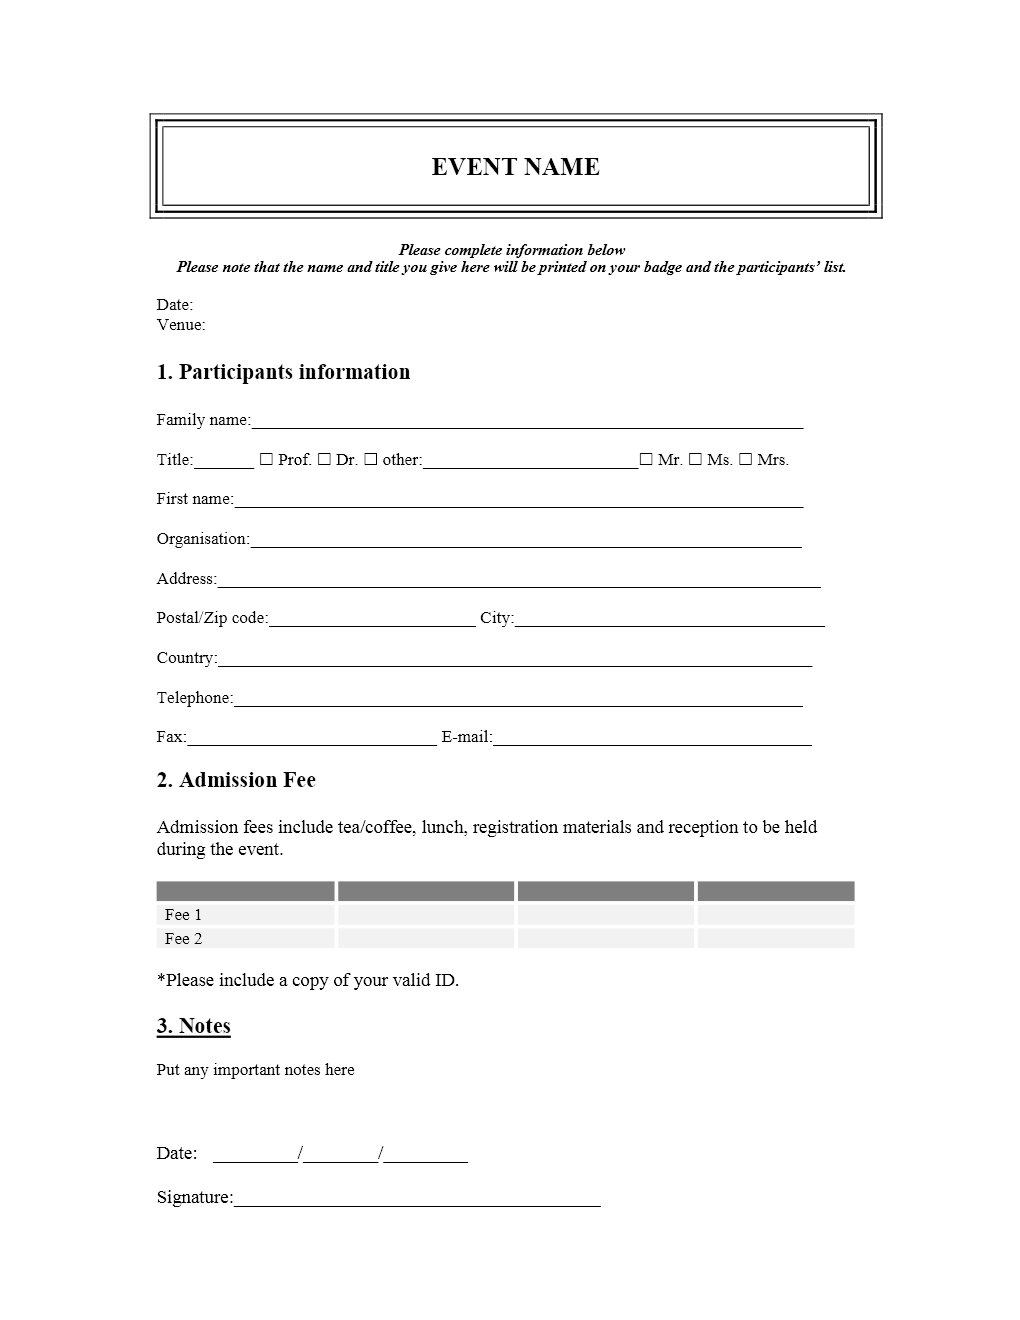 Seminar Participation Registration Form Template For Your Pertaining To Seminar Registration Form Template Word